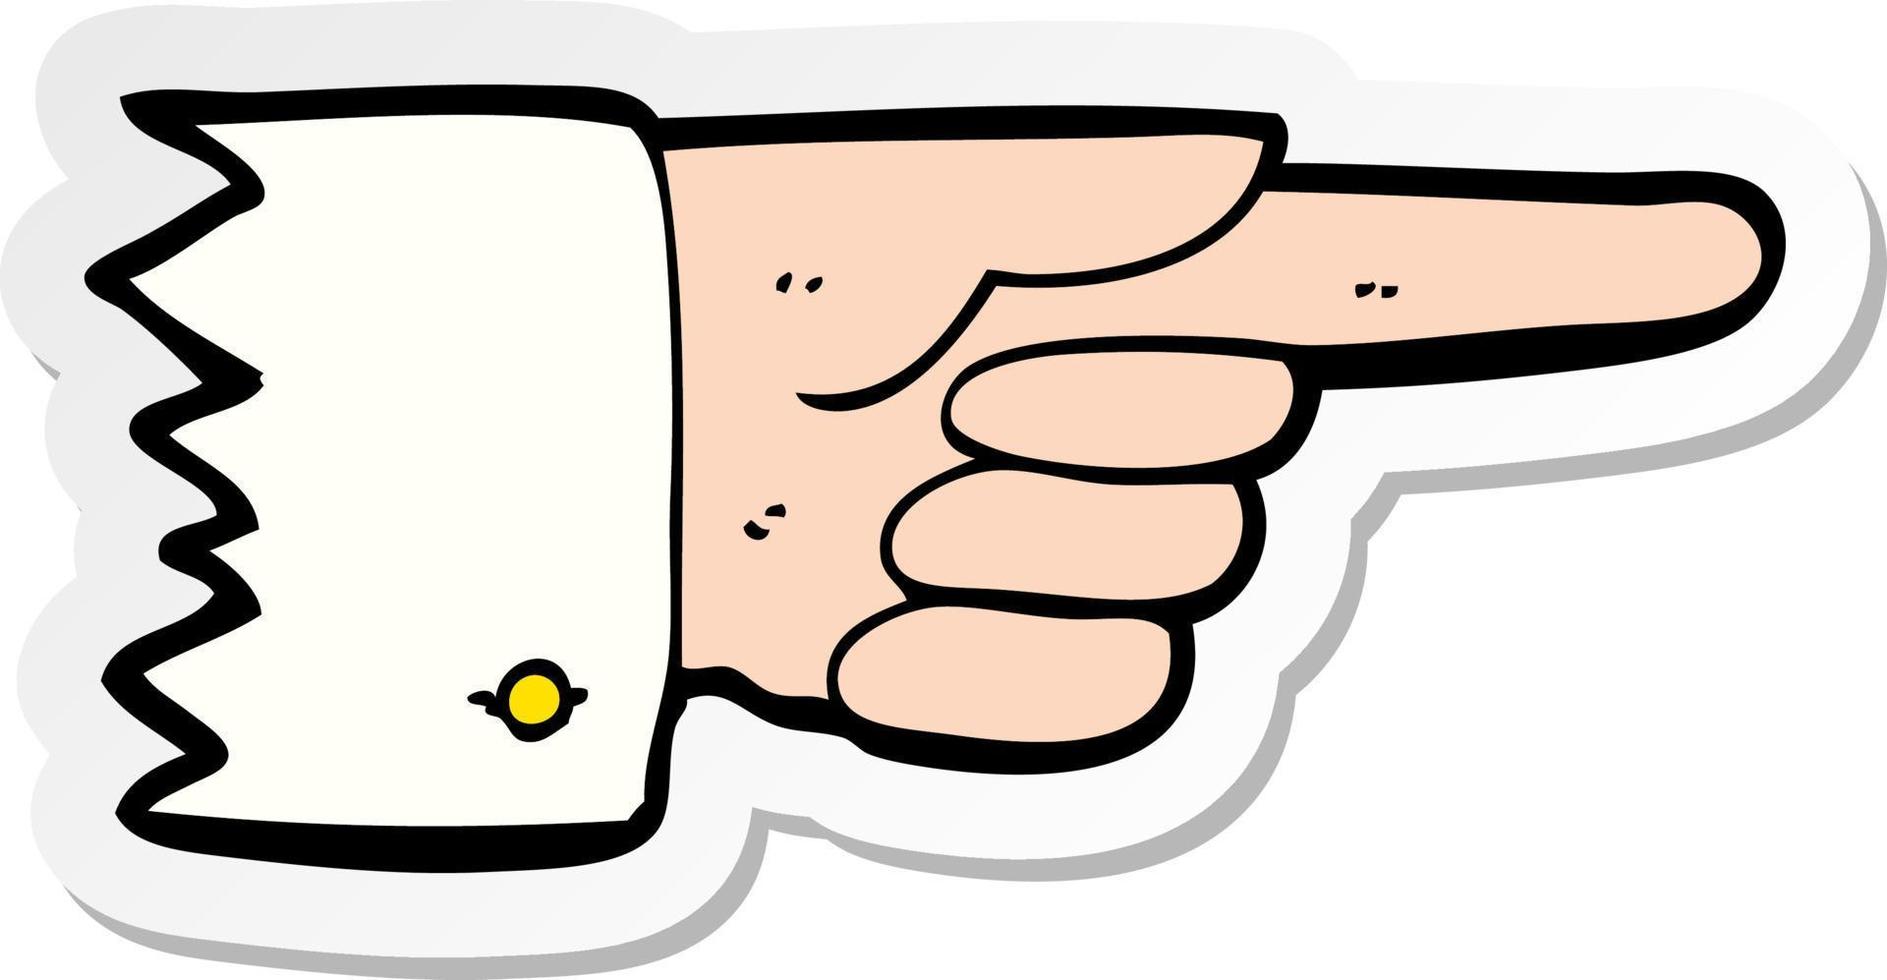 autocollant d'un symbole de main pointée de dessin animé vecteur